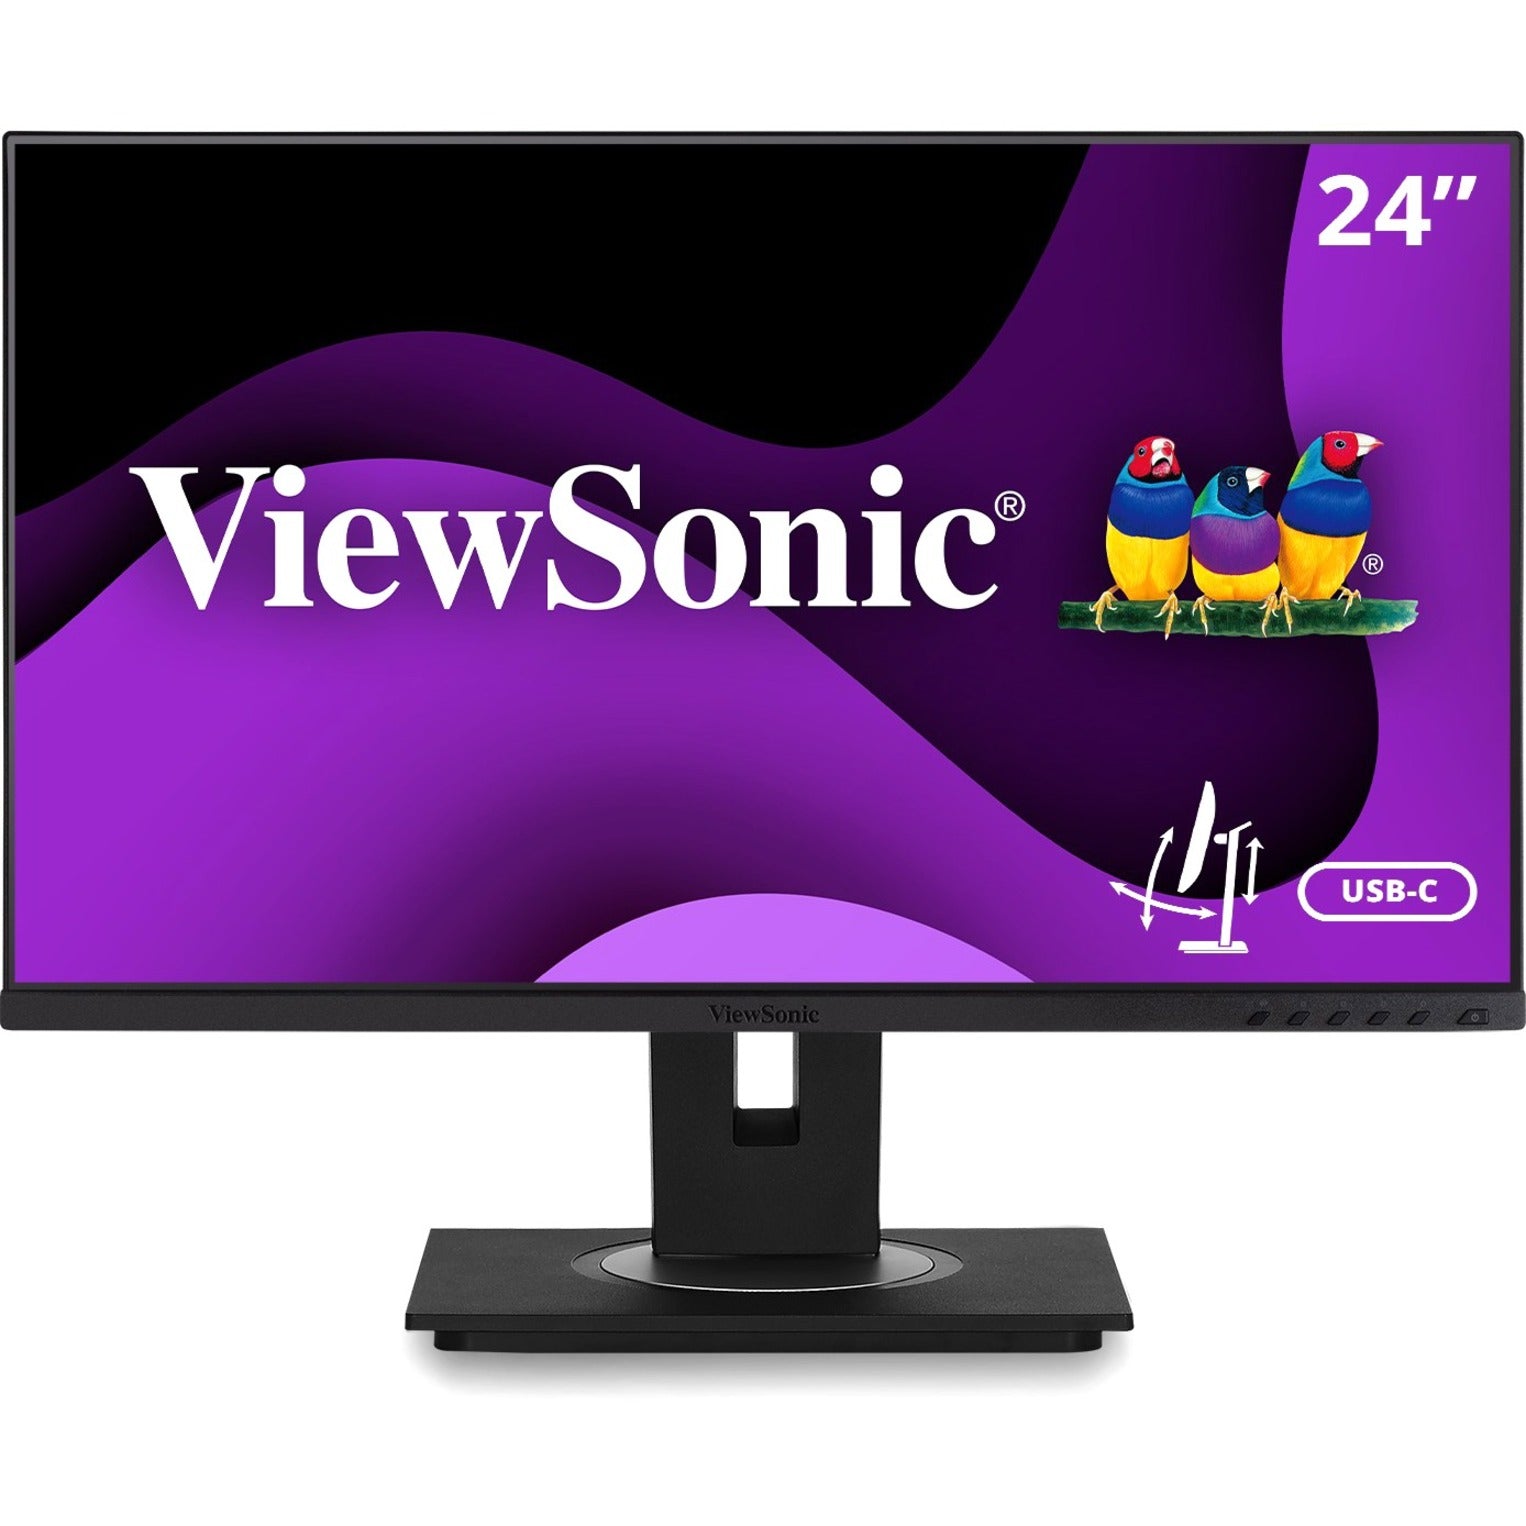 ViewSonic VG2456 24" USB-C Docking Monitor, Built-In Ethernet, Advanced Ergonomics